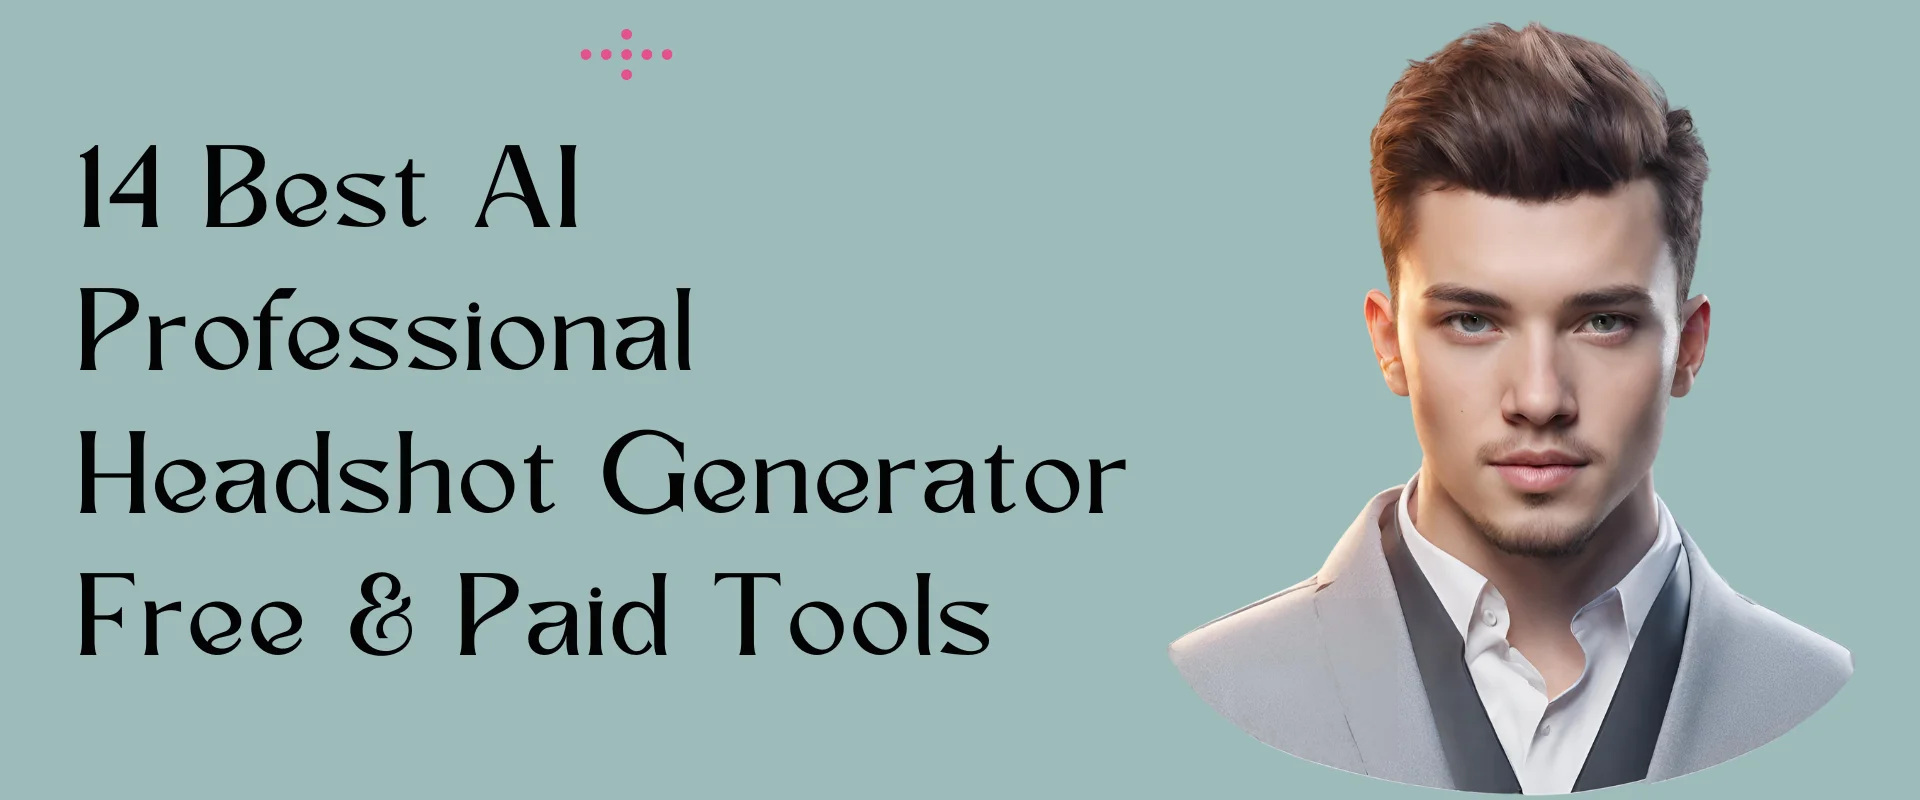 14 Best AI Professional Headshot Generator Free & Paid Tools